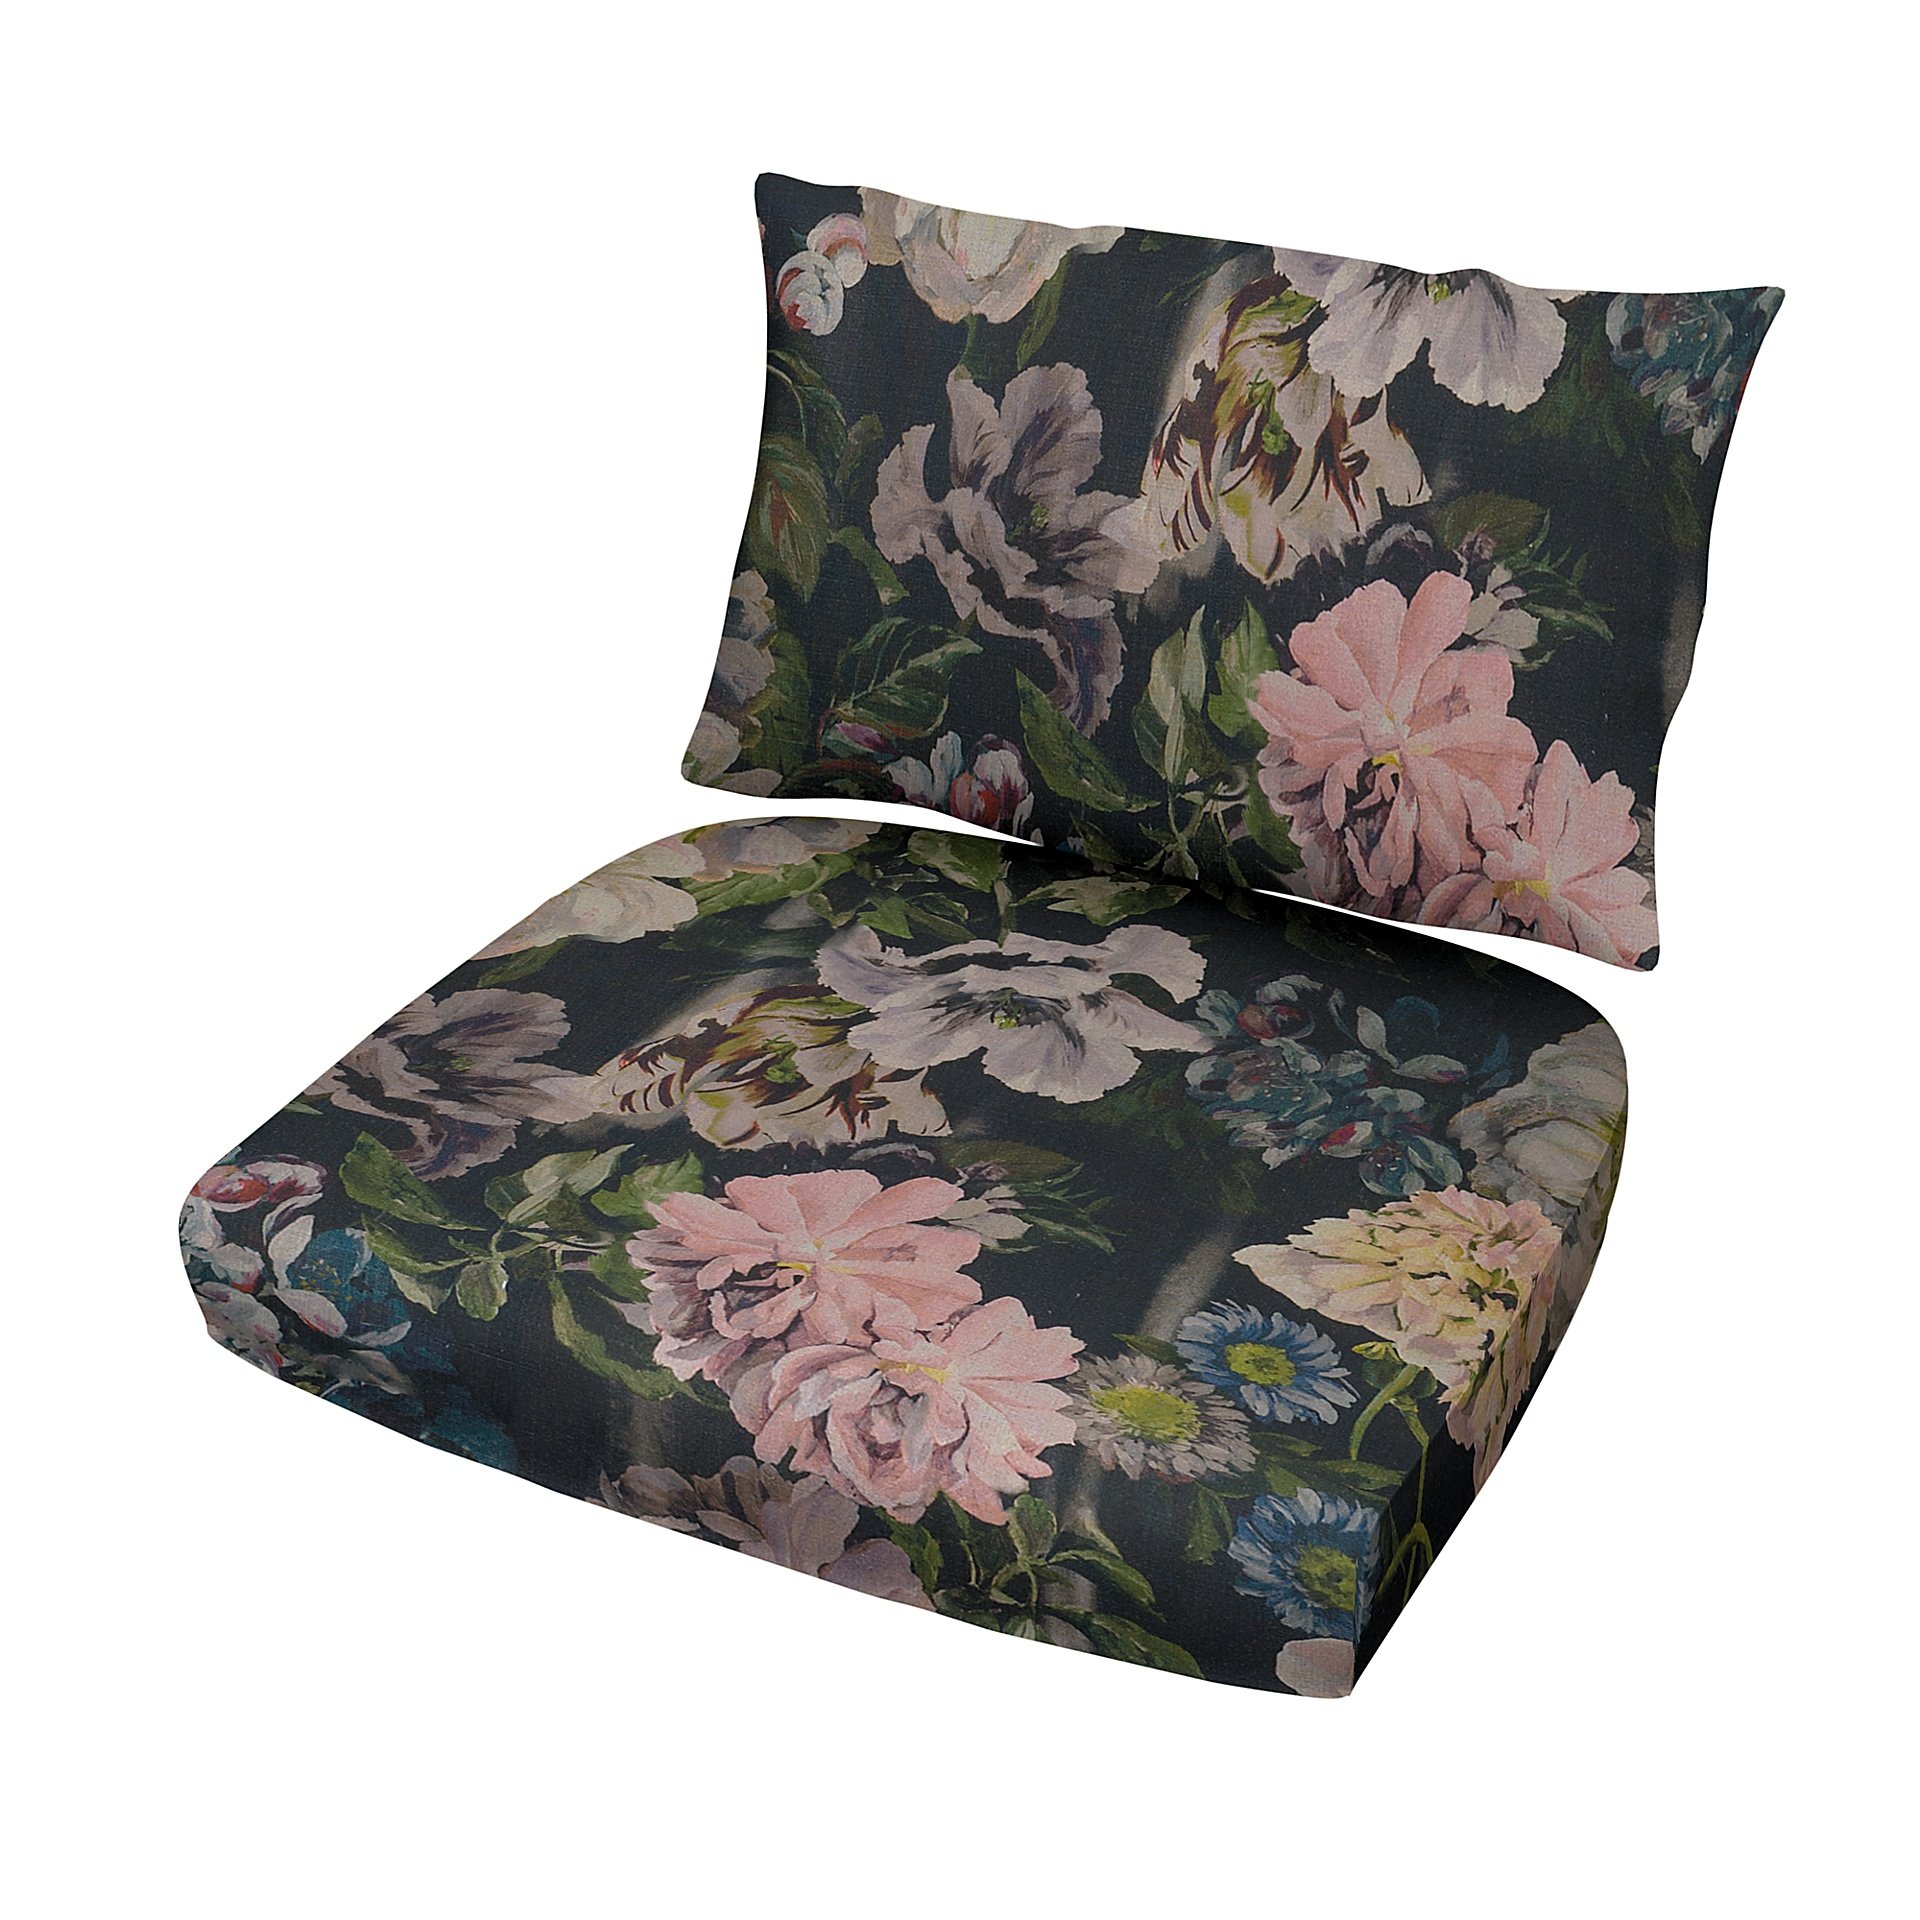 IKEA - Stockholm Rattan Chair Cushion Cover Set, Delft Flower - Graphite, Linen - Bemz